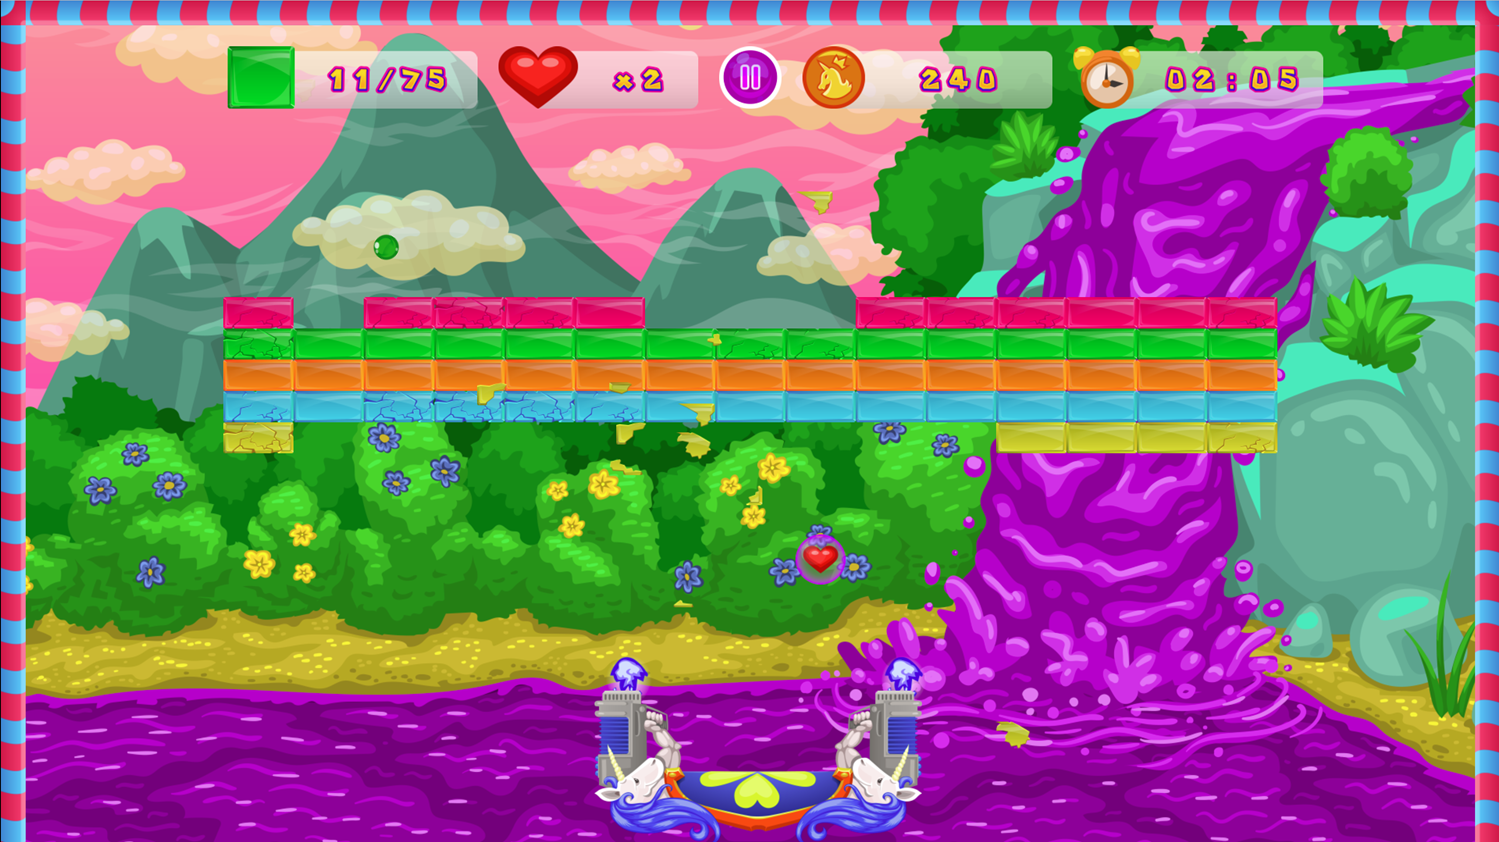 Brick Breaker Unicorn Game Level Progress Screenshot.